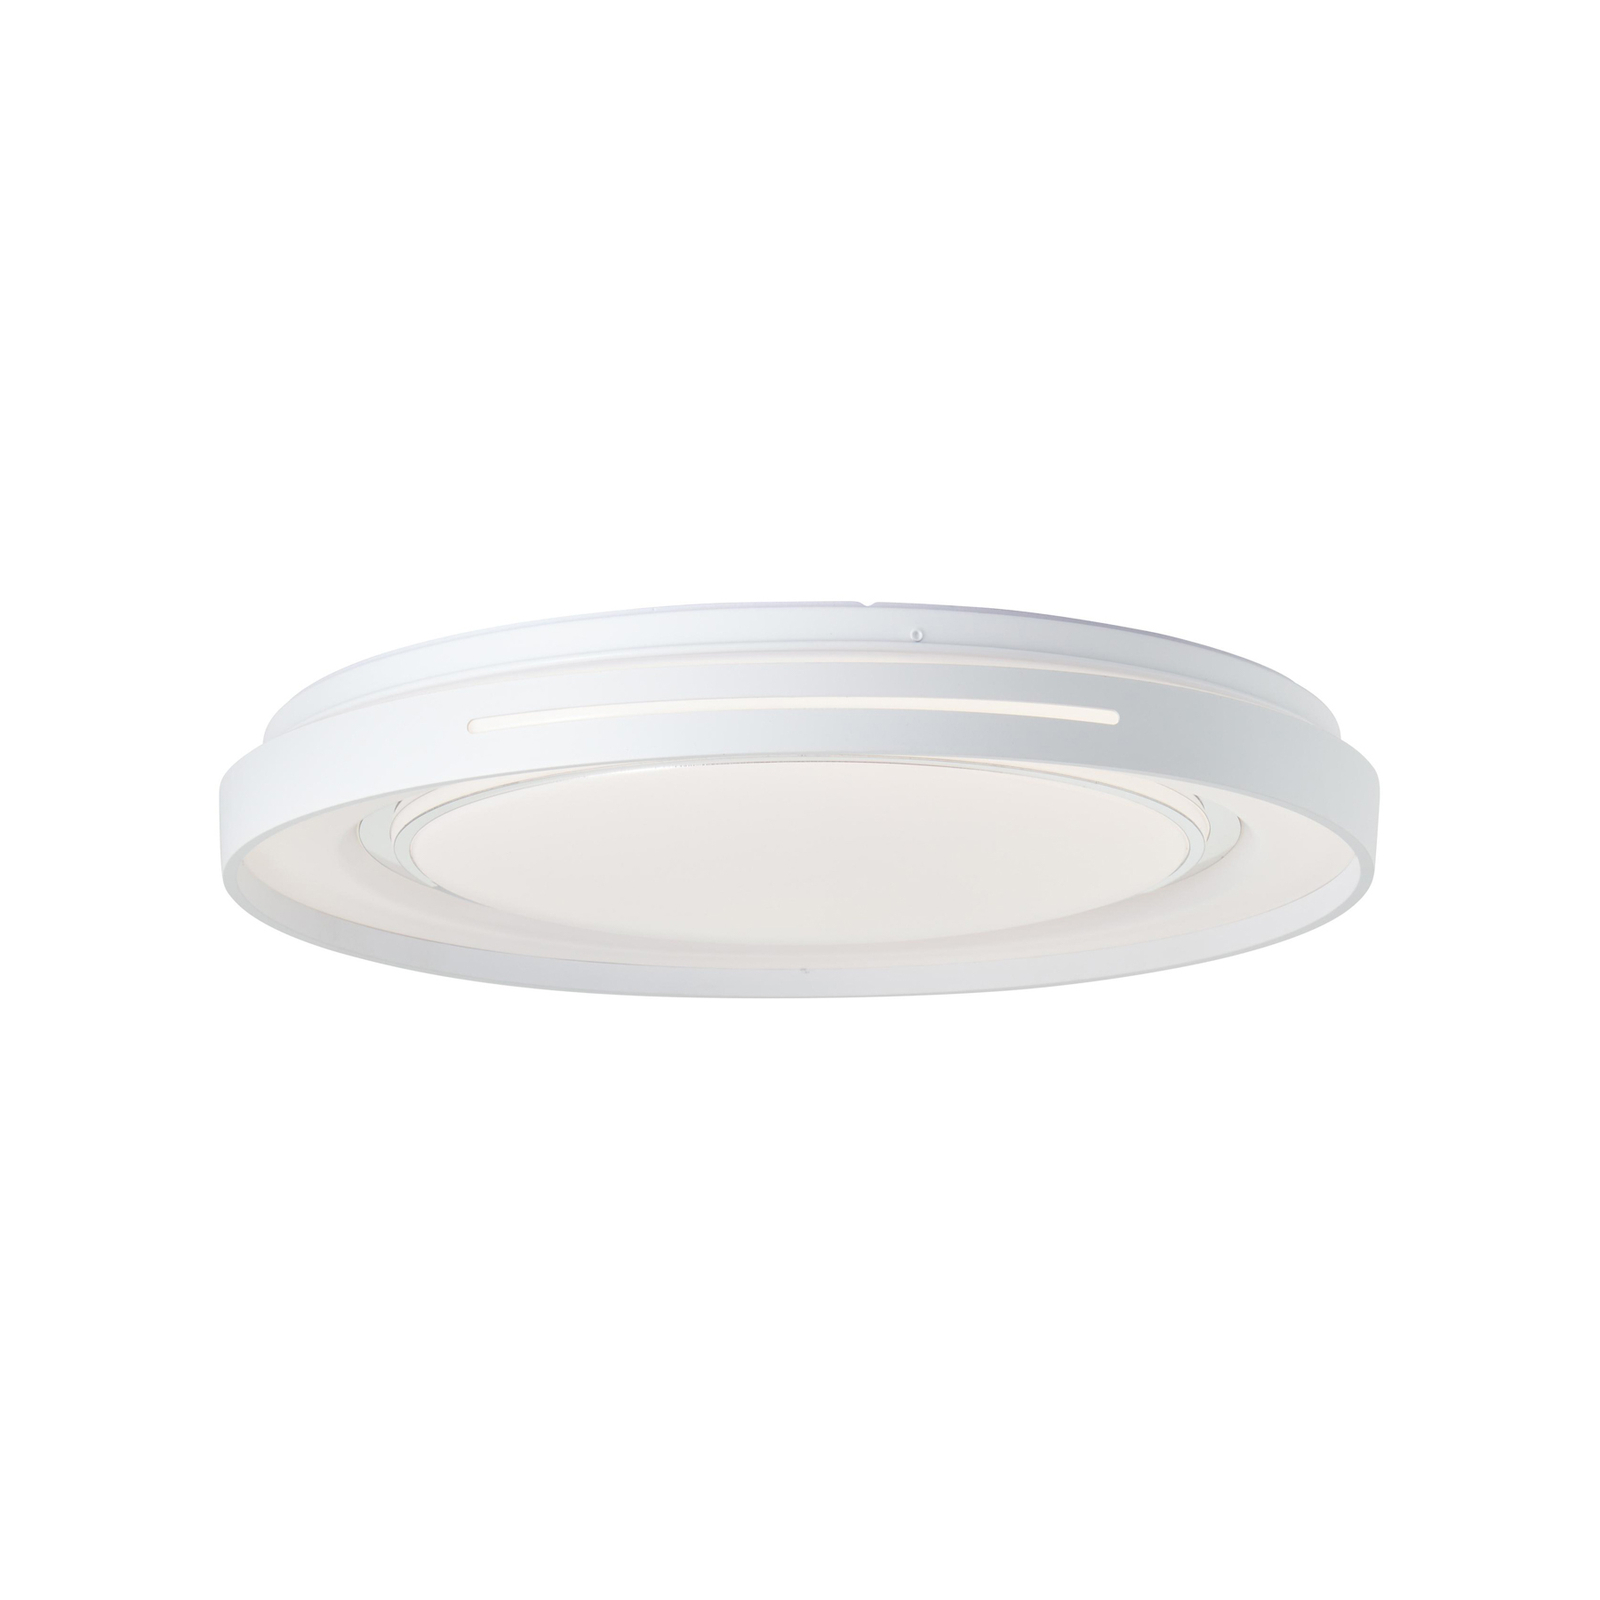 LED ceiling lamp Barty, white/chrome, Ø 48.5 cm, CCT, metal